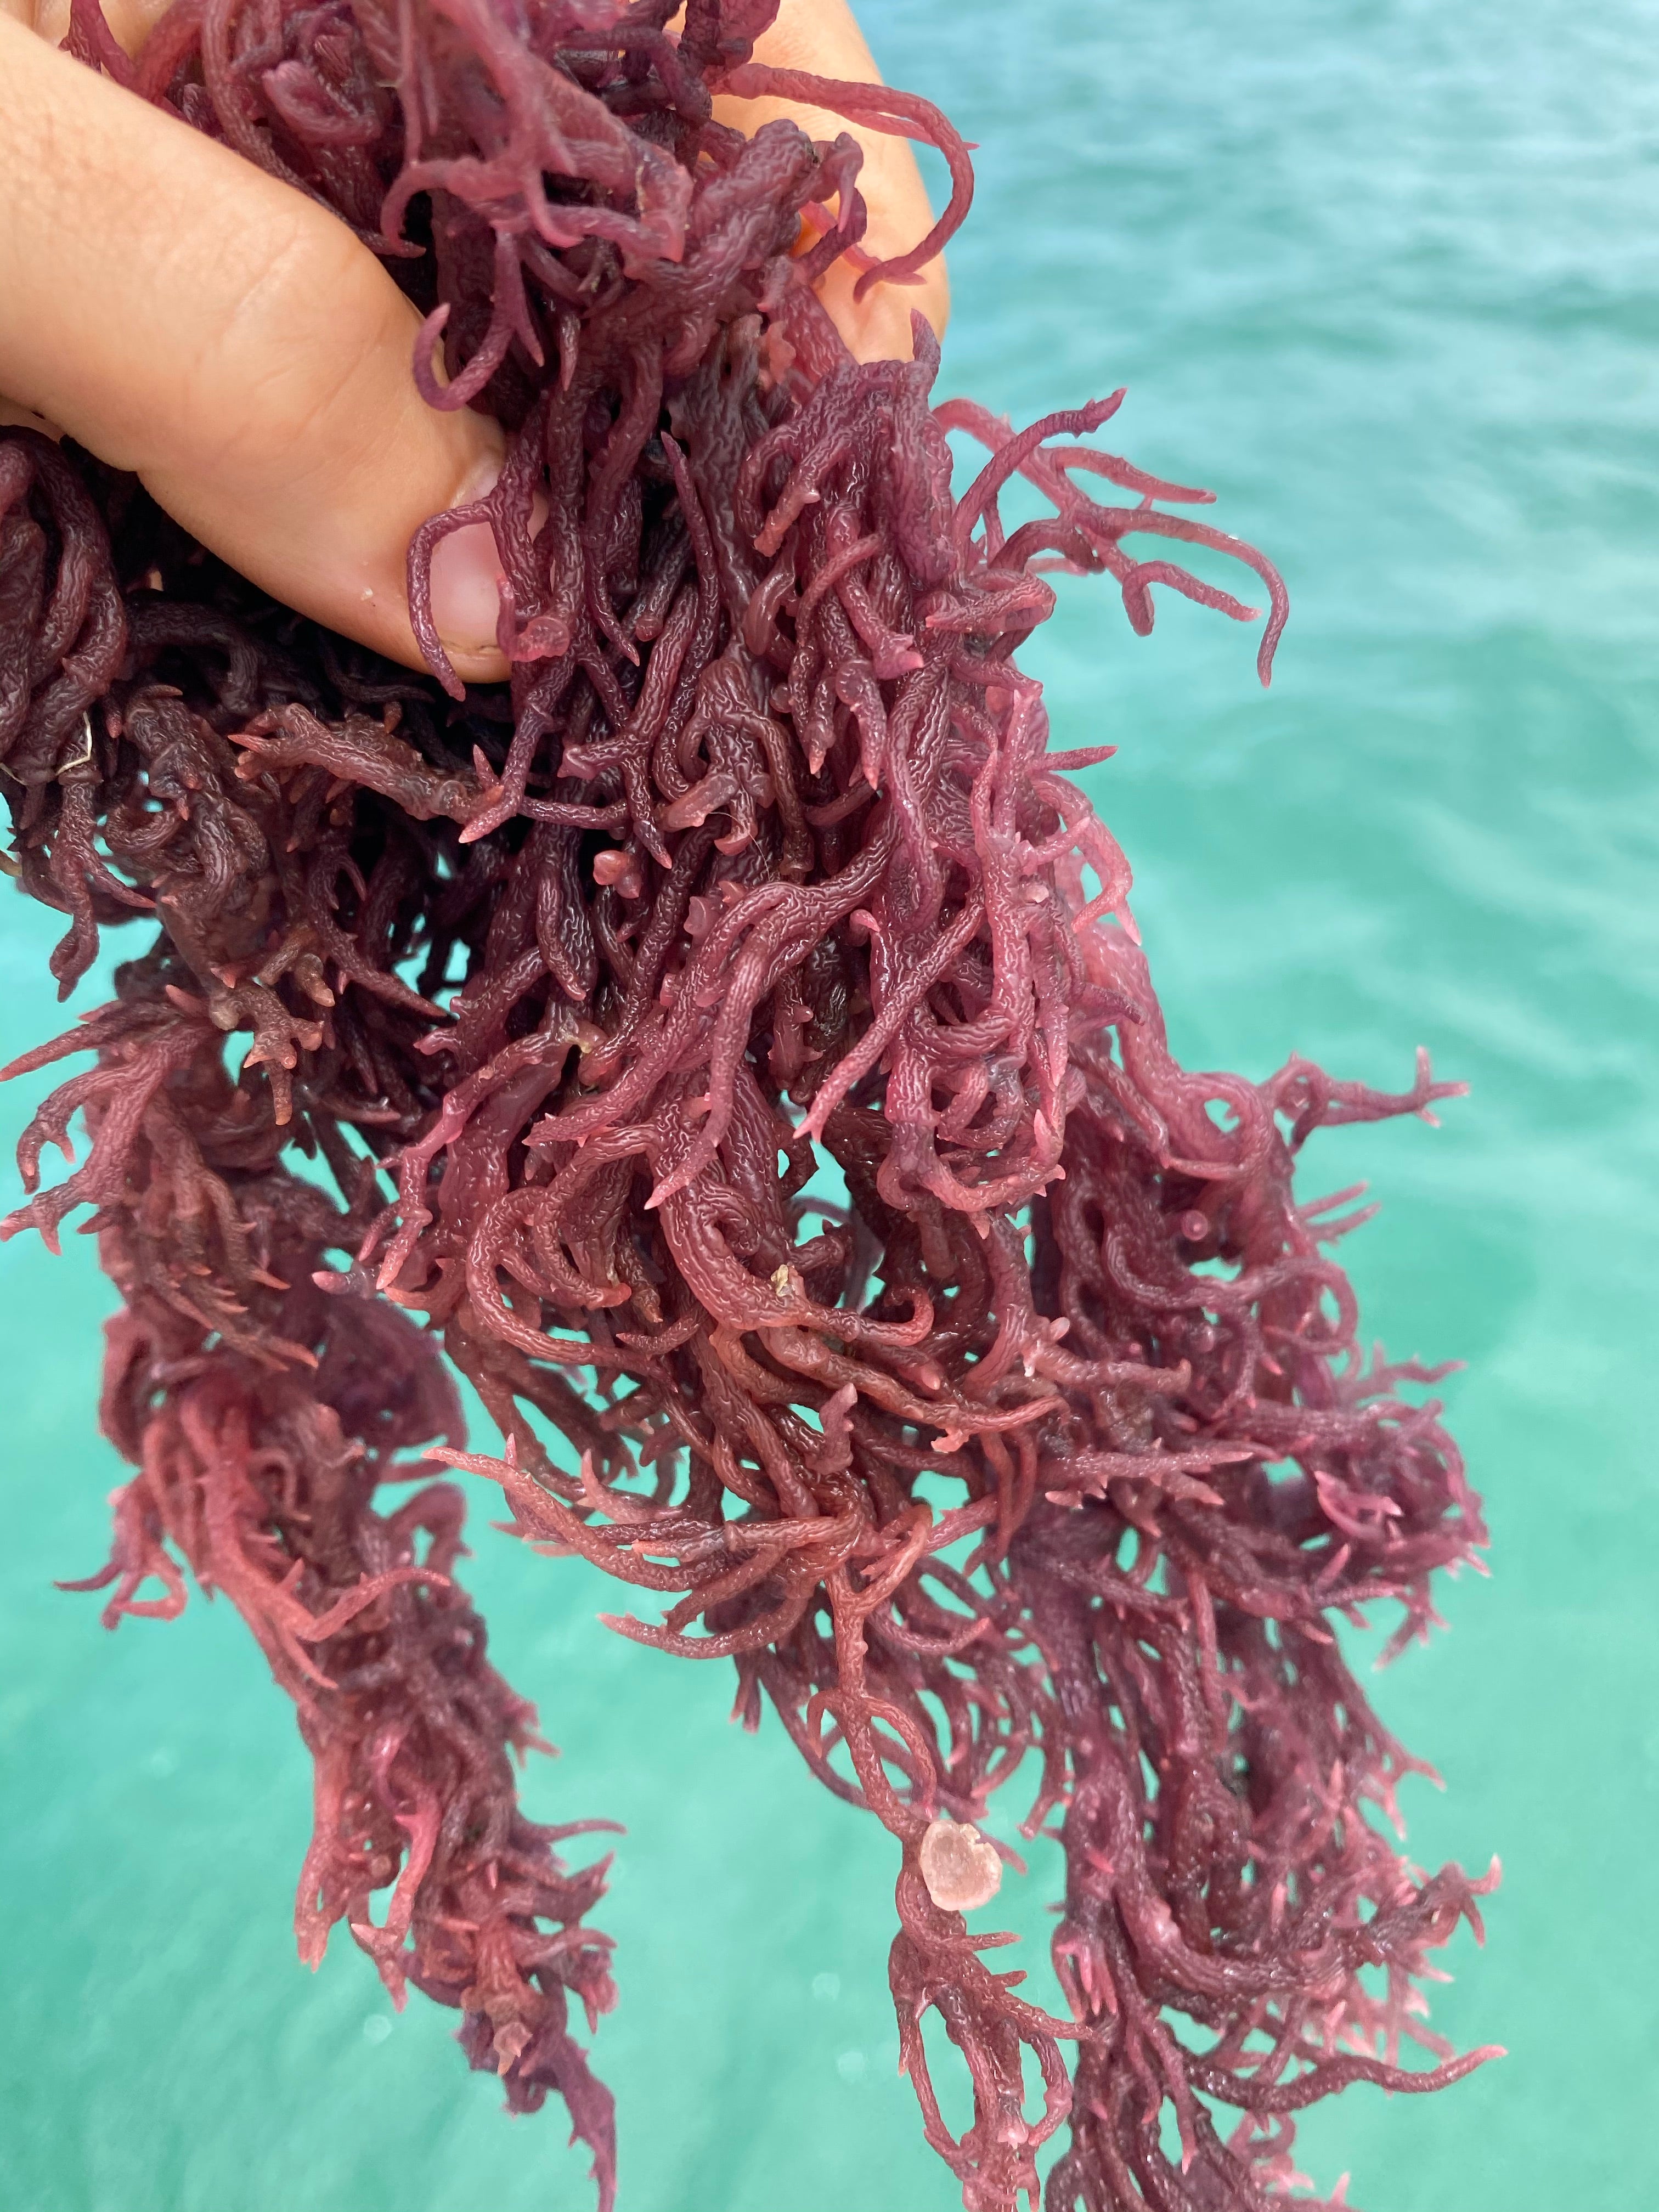 Wild Harvested Purple Sea Moss Miami Fruit